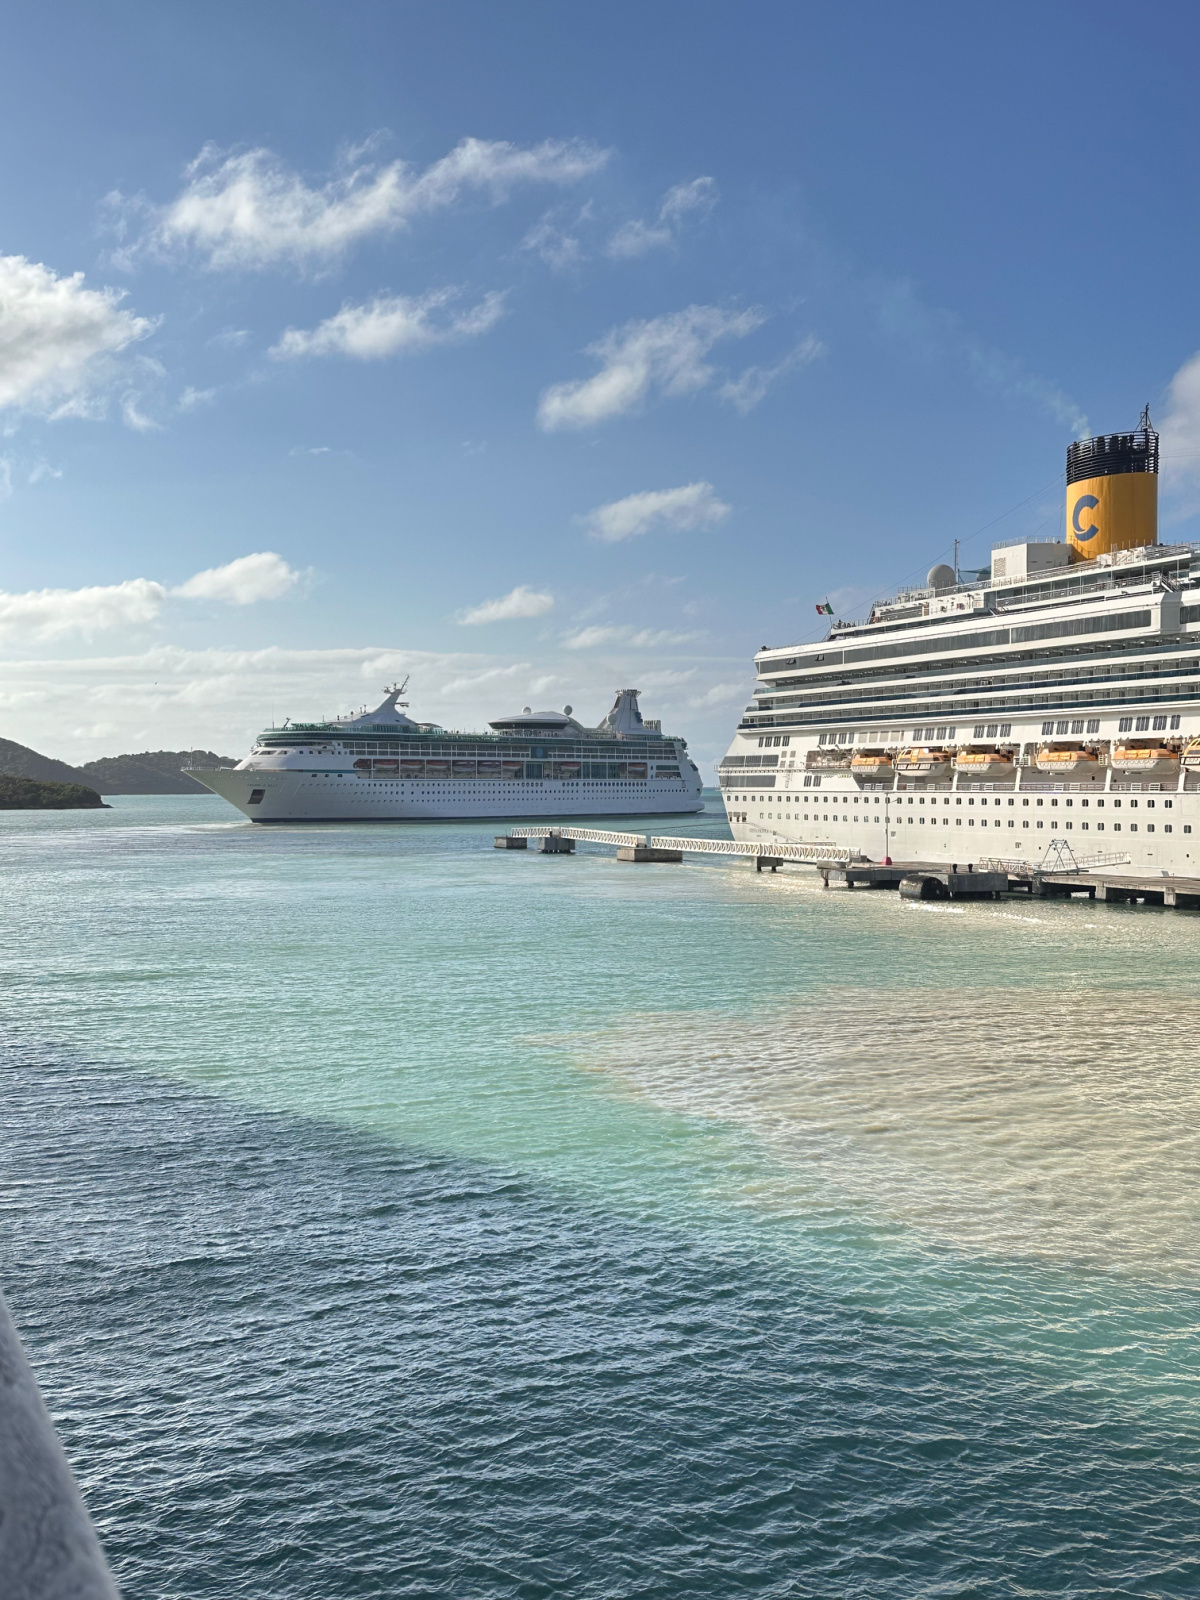 Cruise ships at St. John's Antigua.